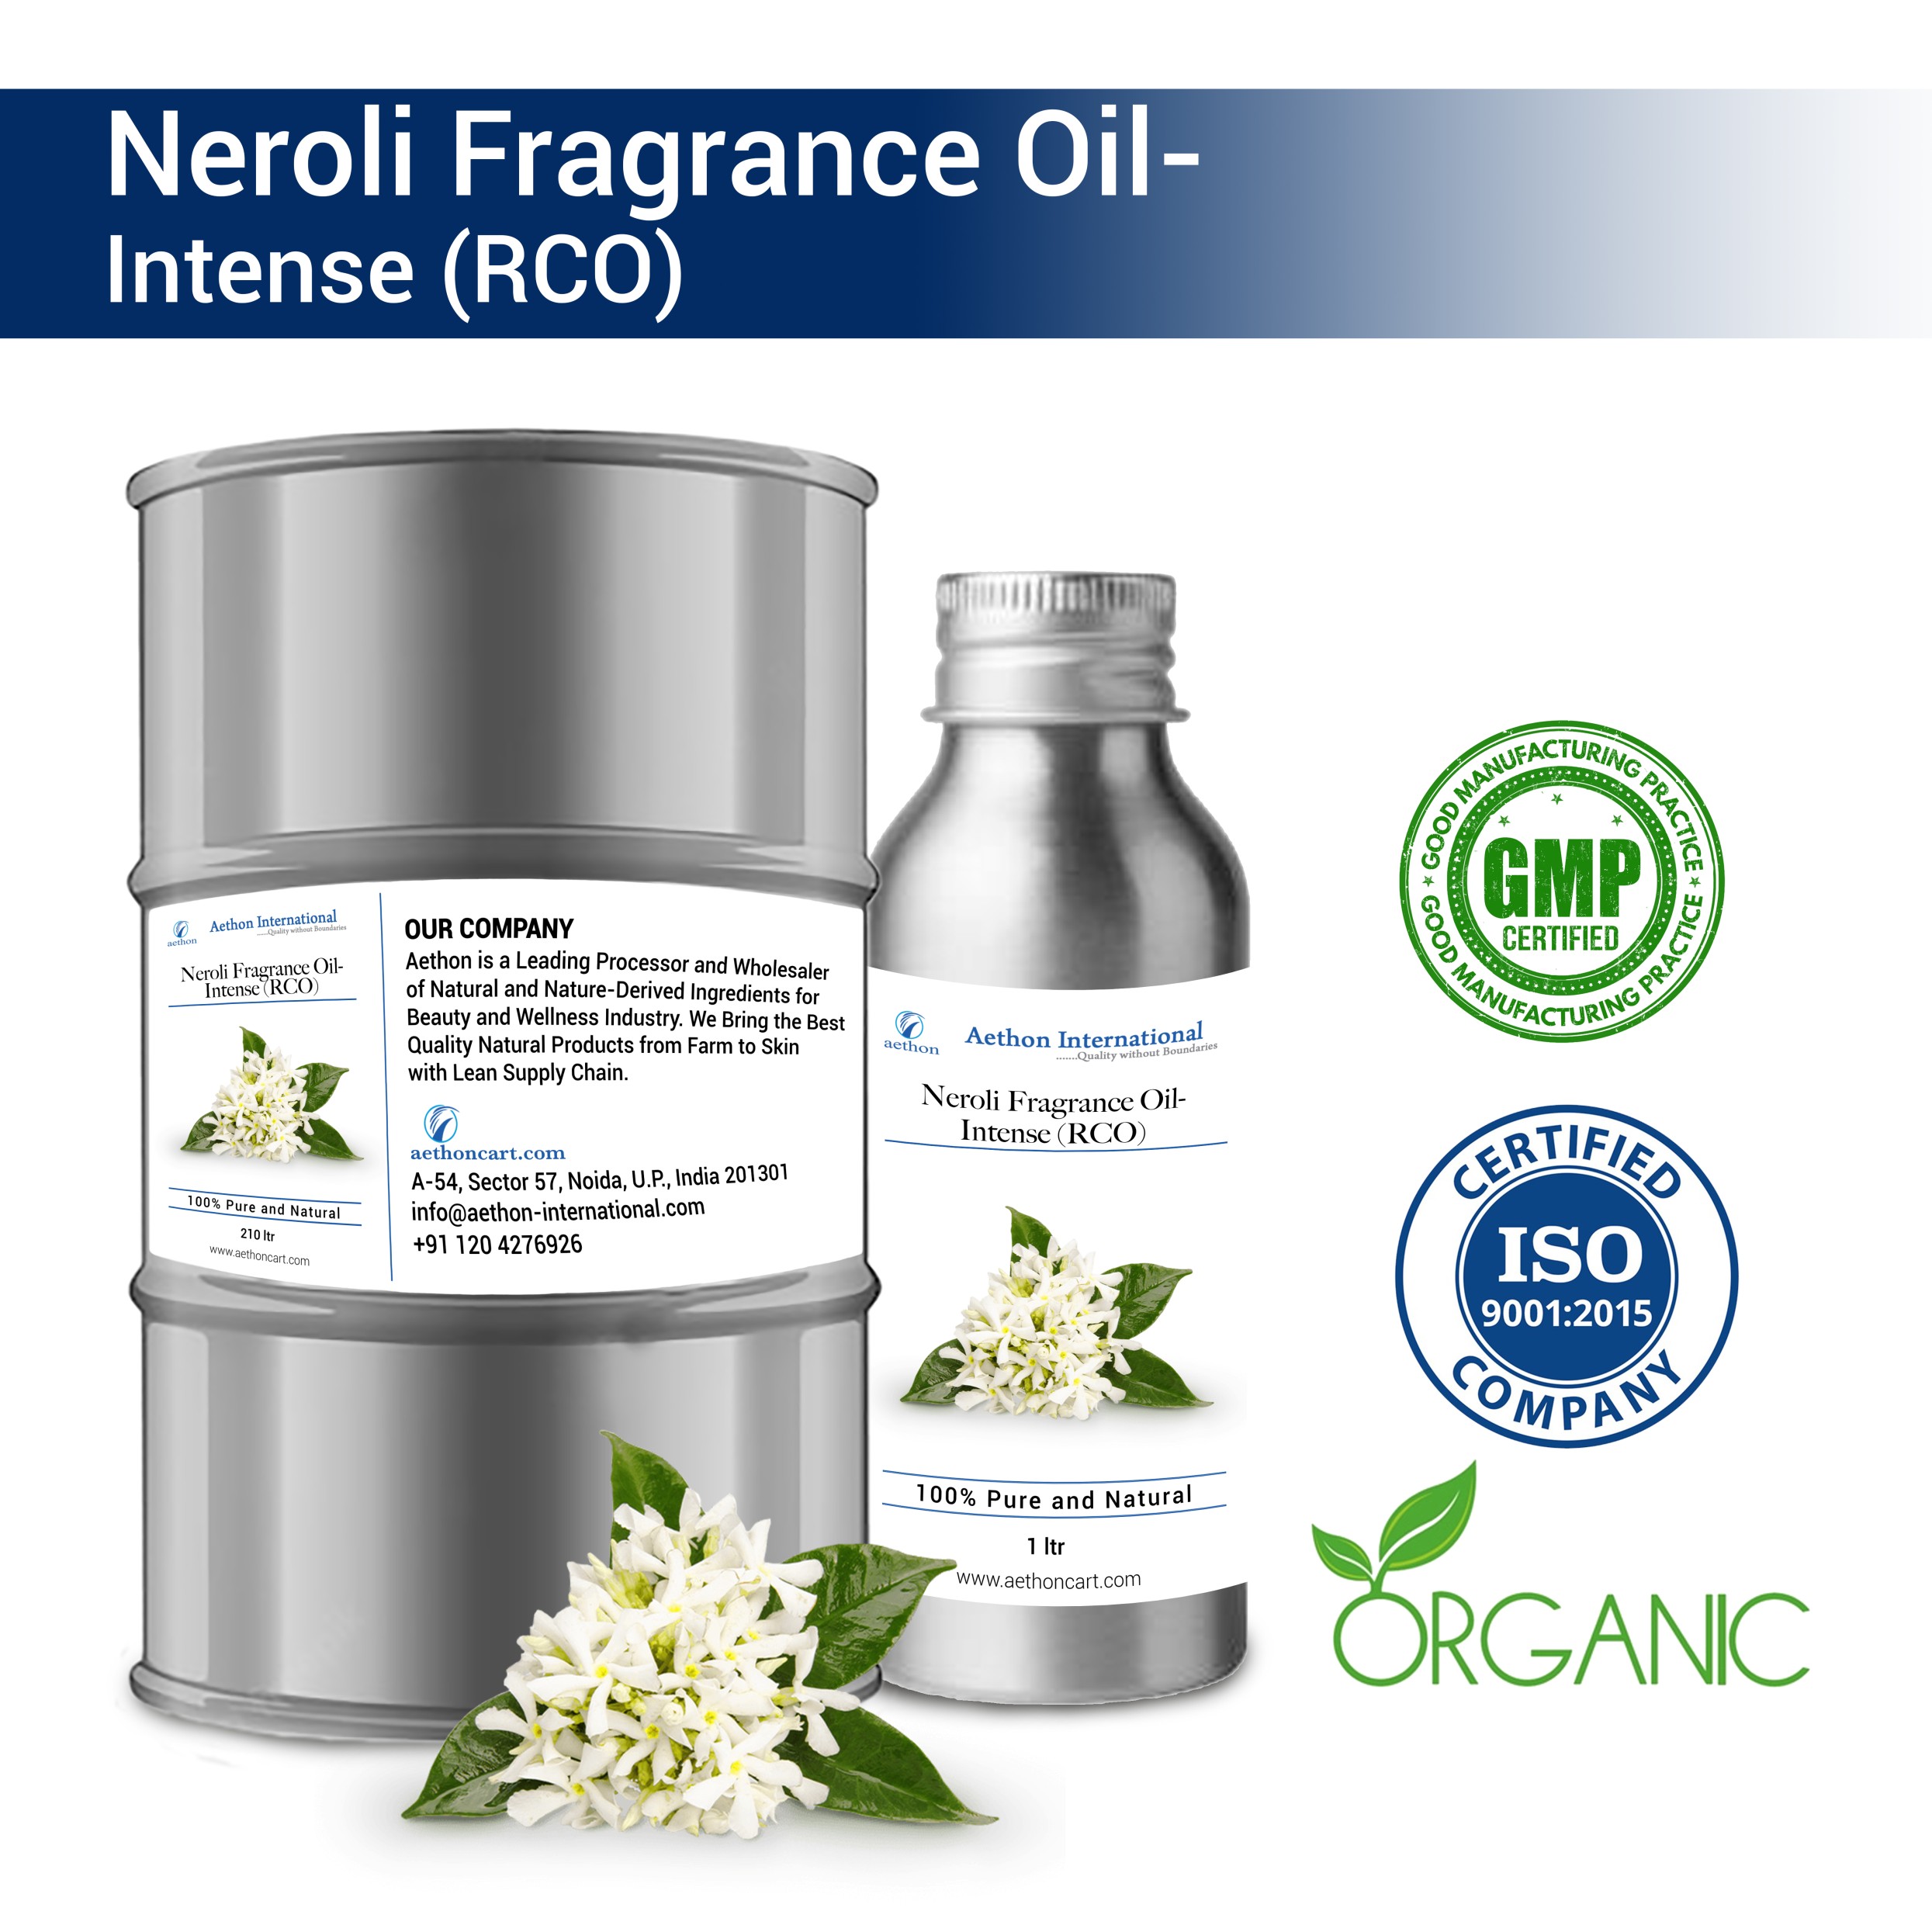 Neroli Fragrance – Intense (RCO)